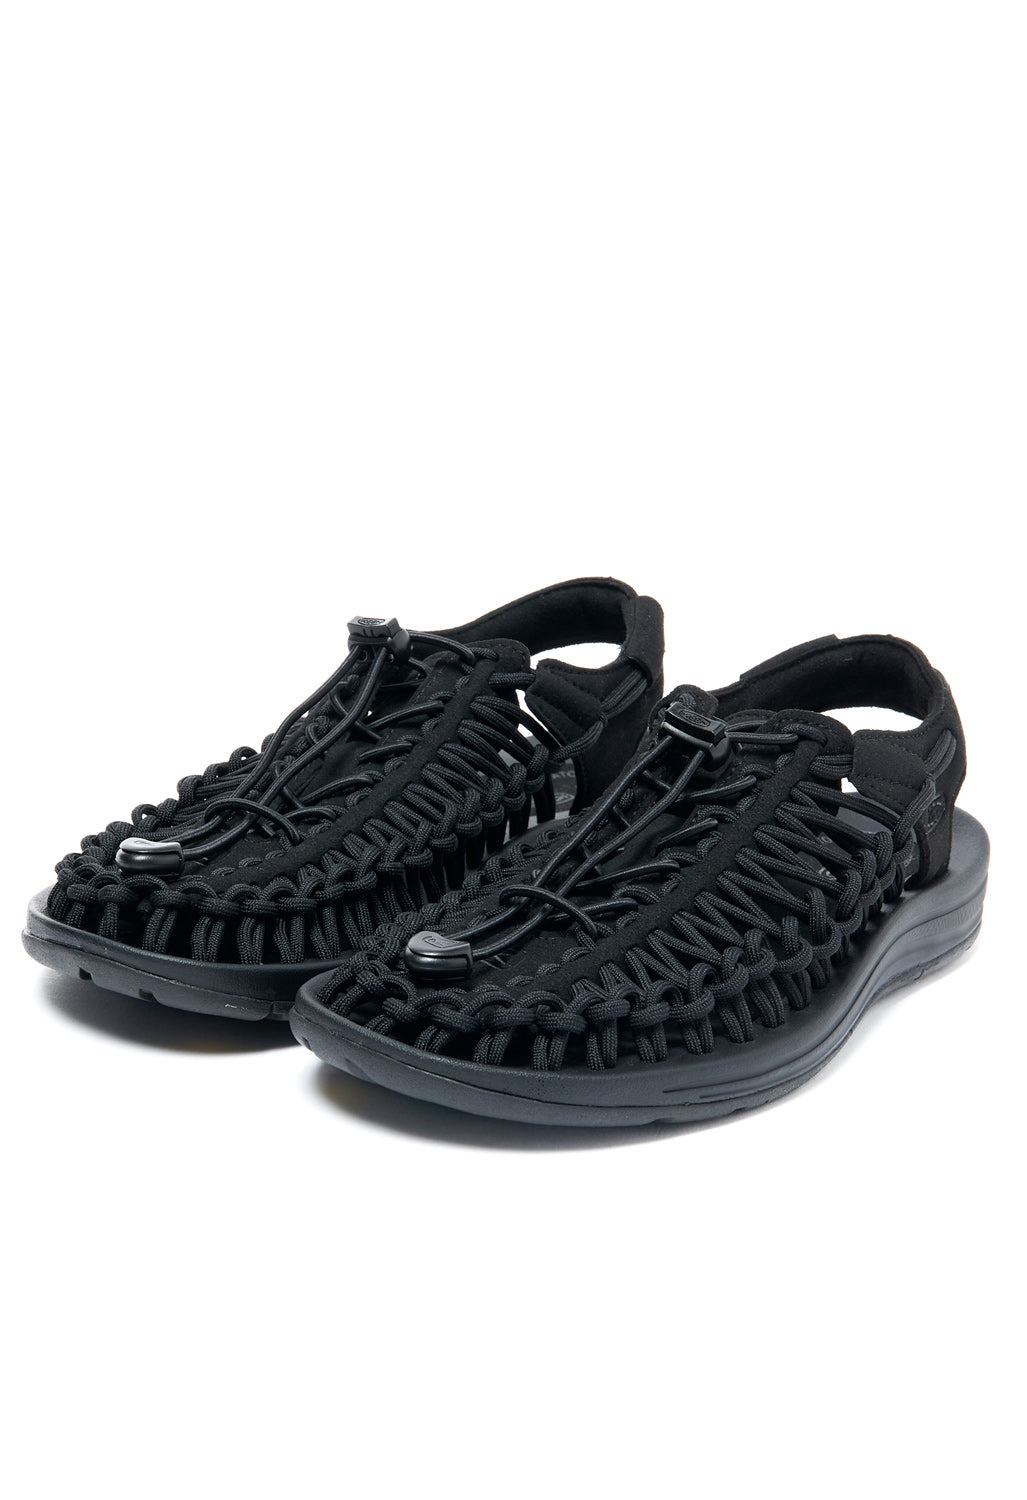 Keen Women's Uneek Sandals - Black / Black